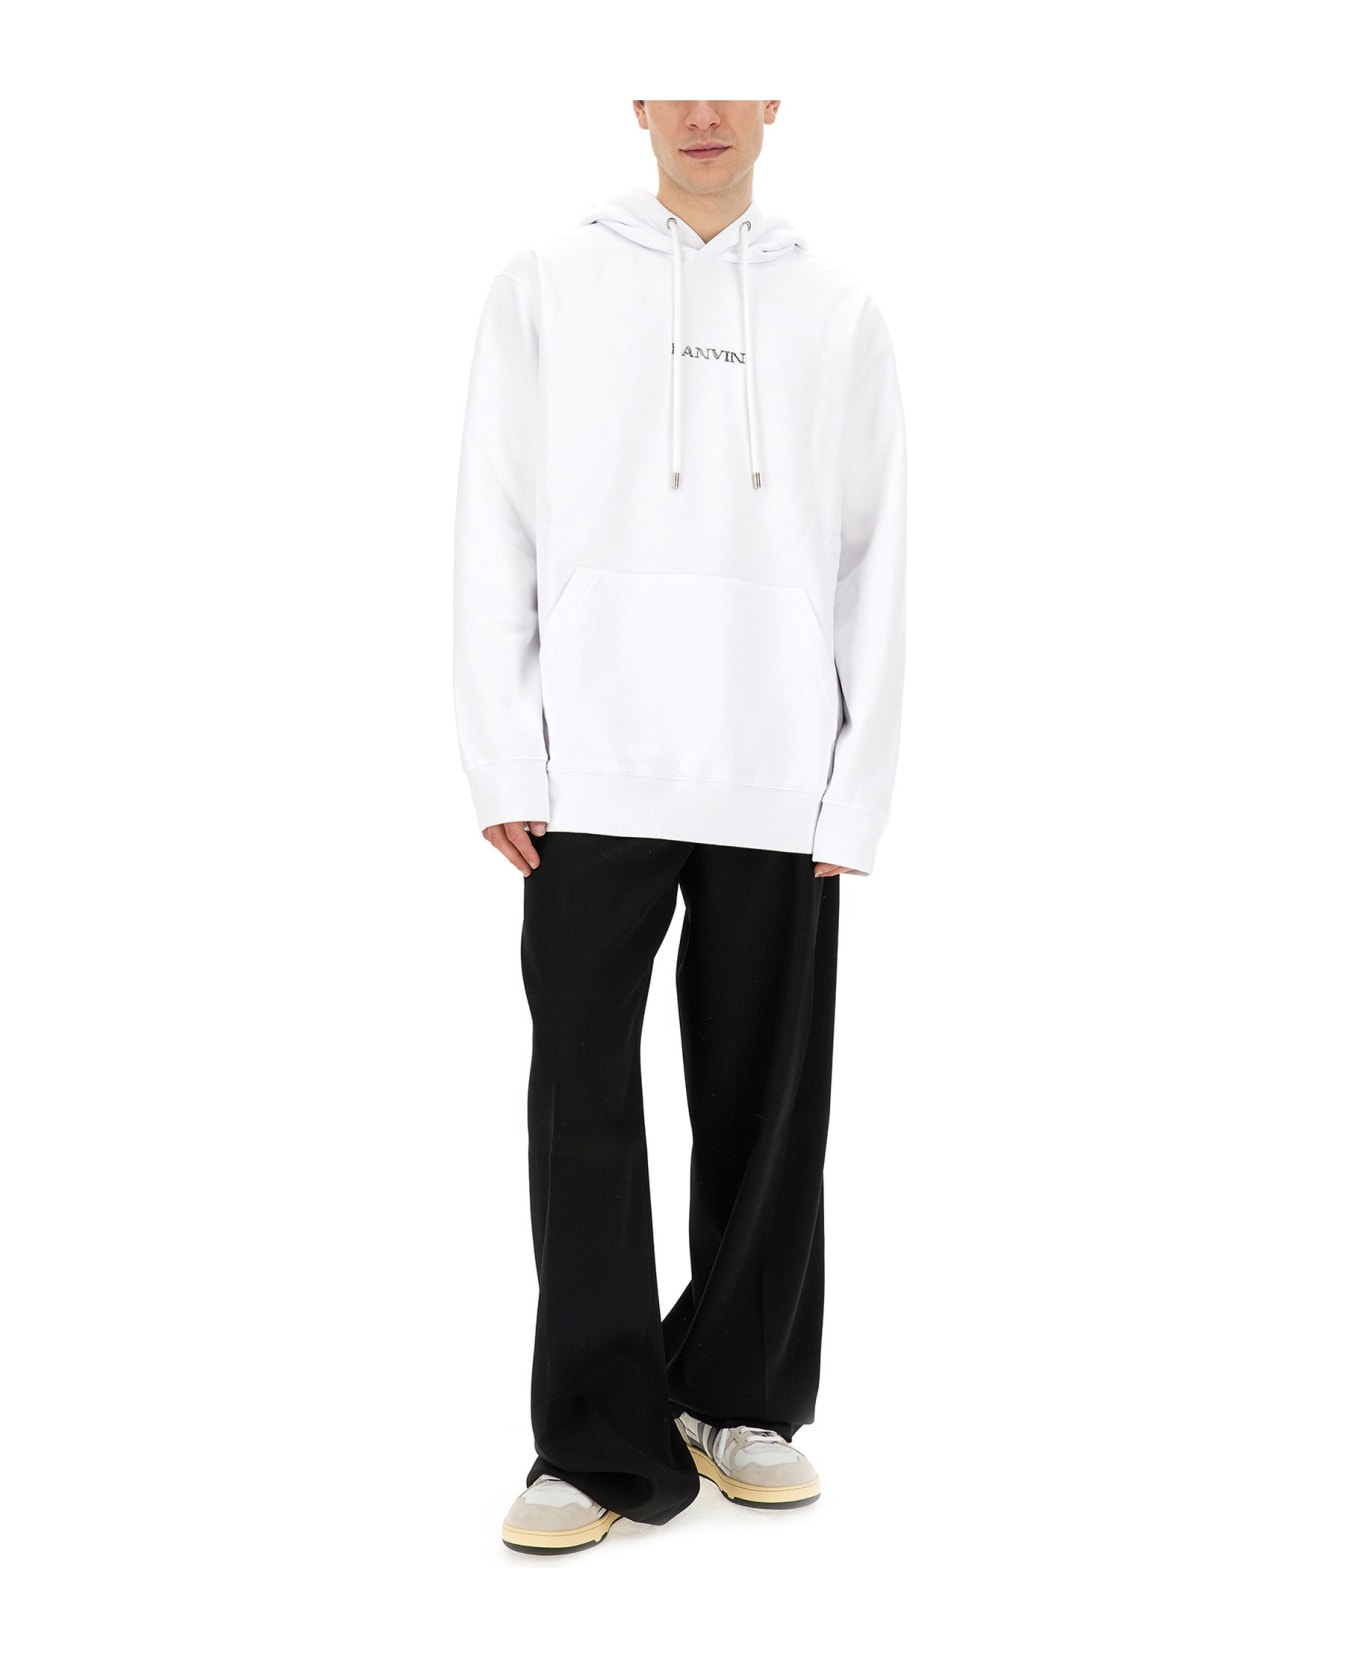 Lanvin Sweatshirt With Logo - OPTIC WHITE